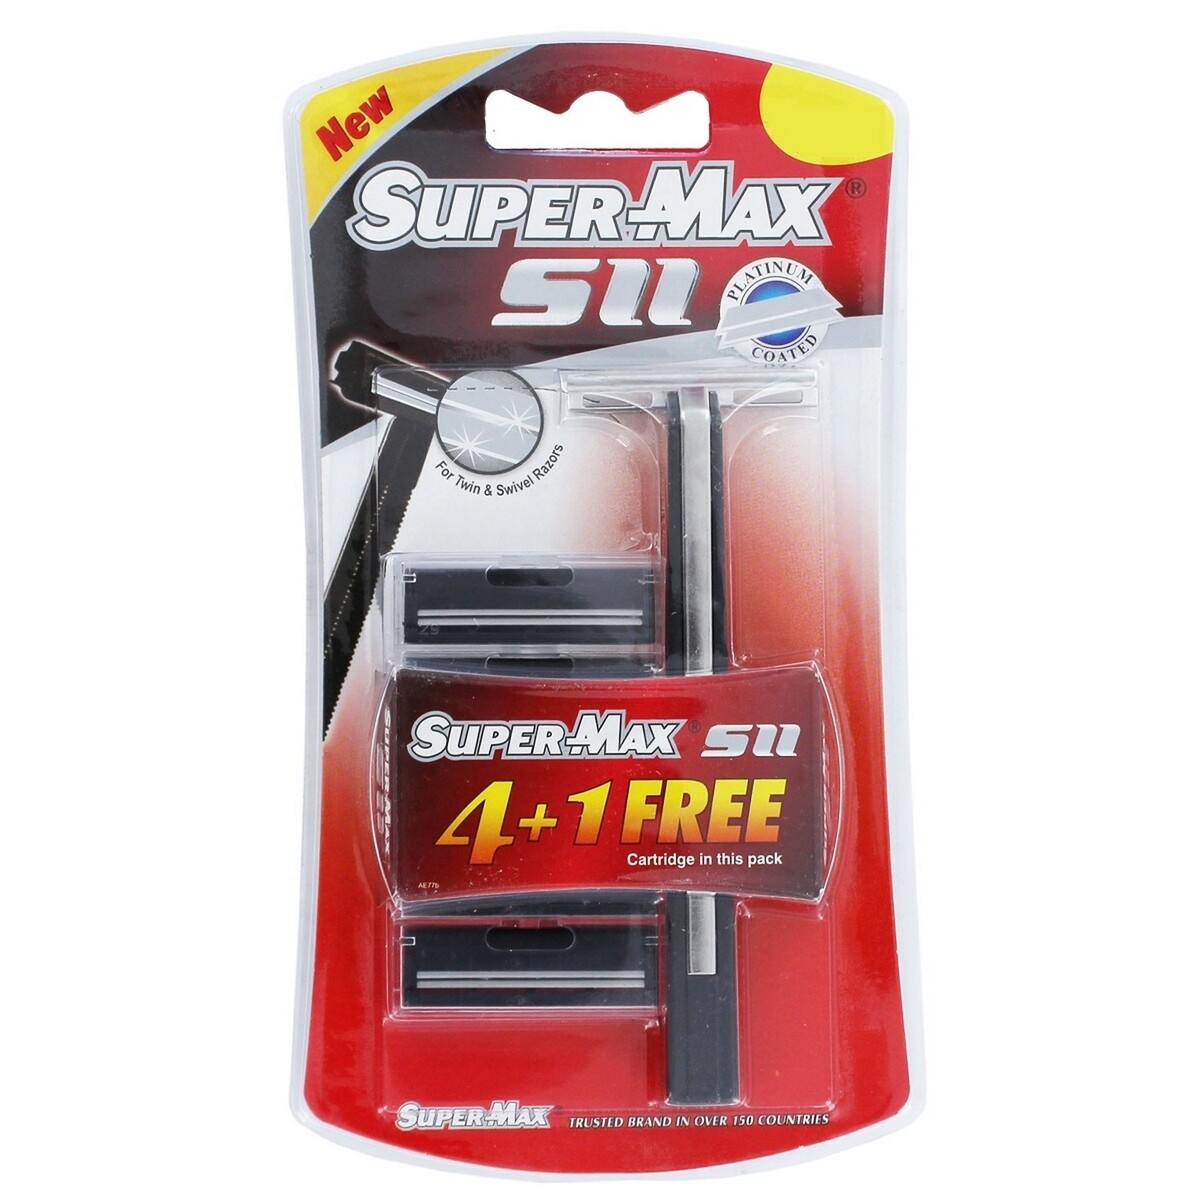 SuperMax Razor Swift II+5 Cartridge